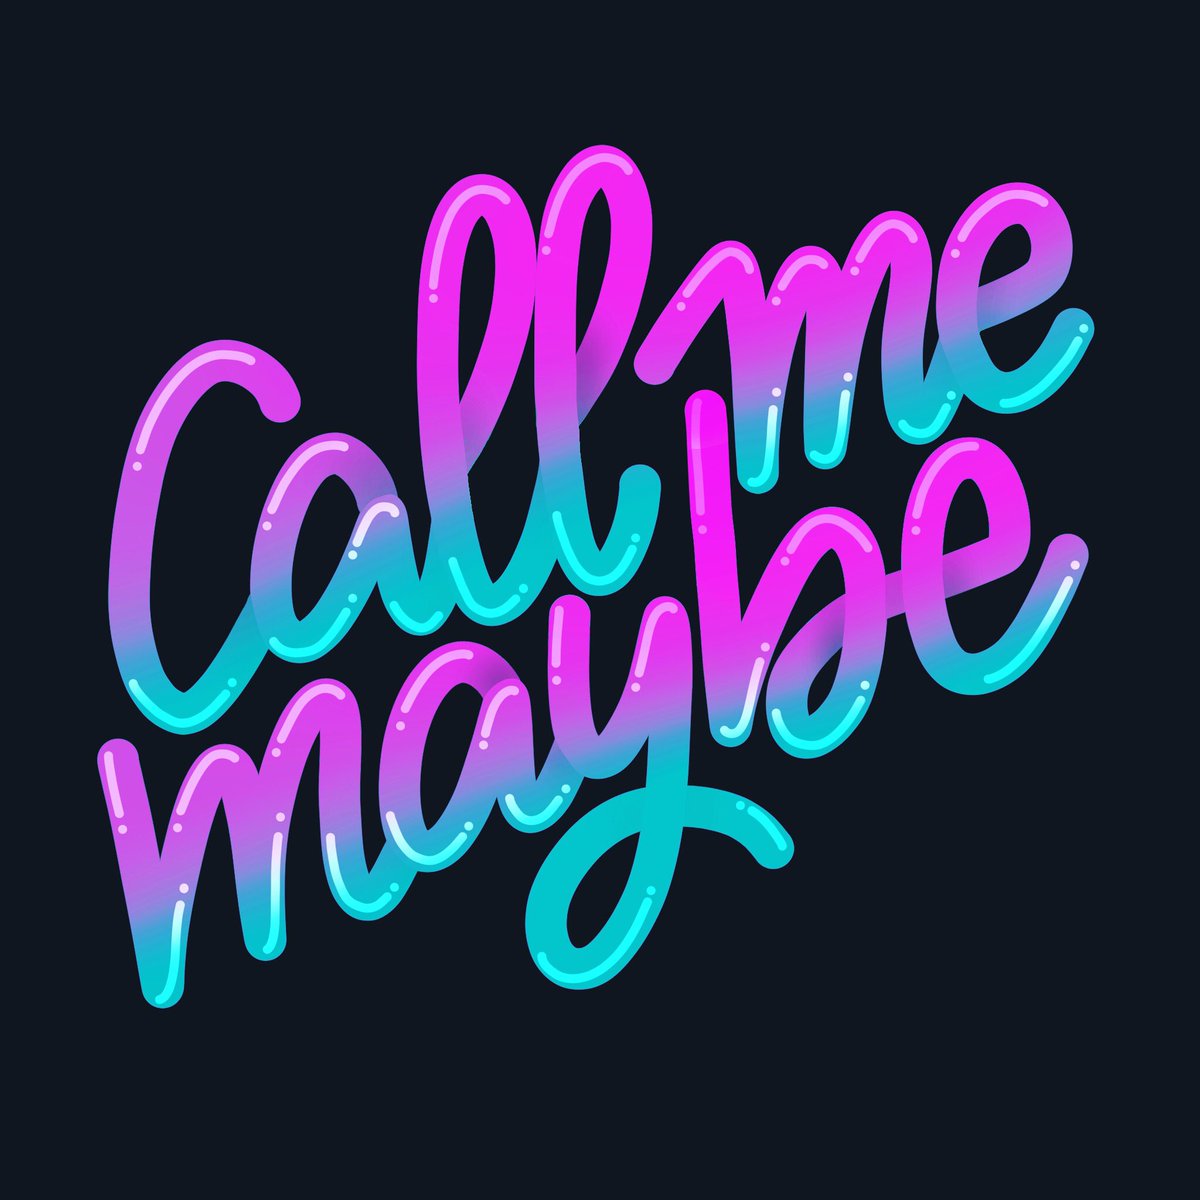 Call me maybe